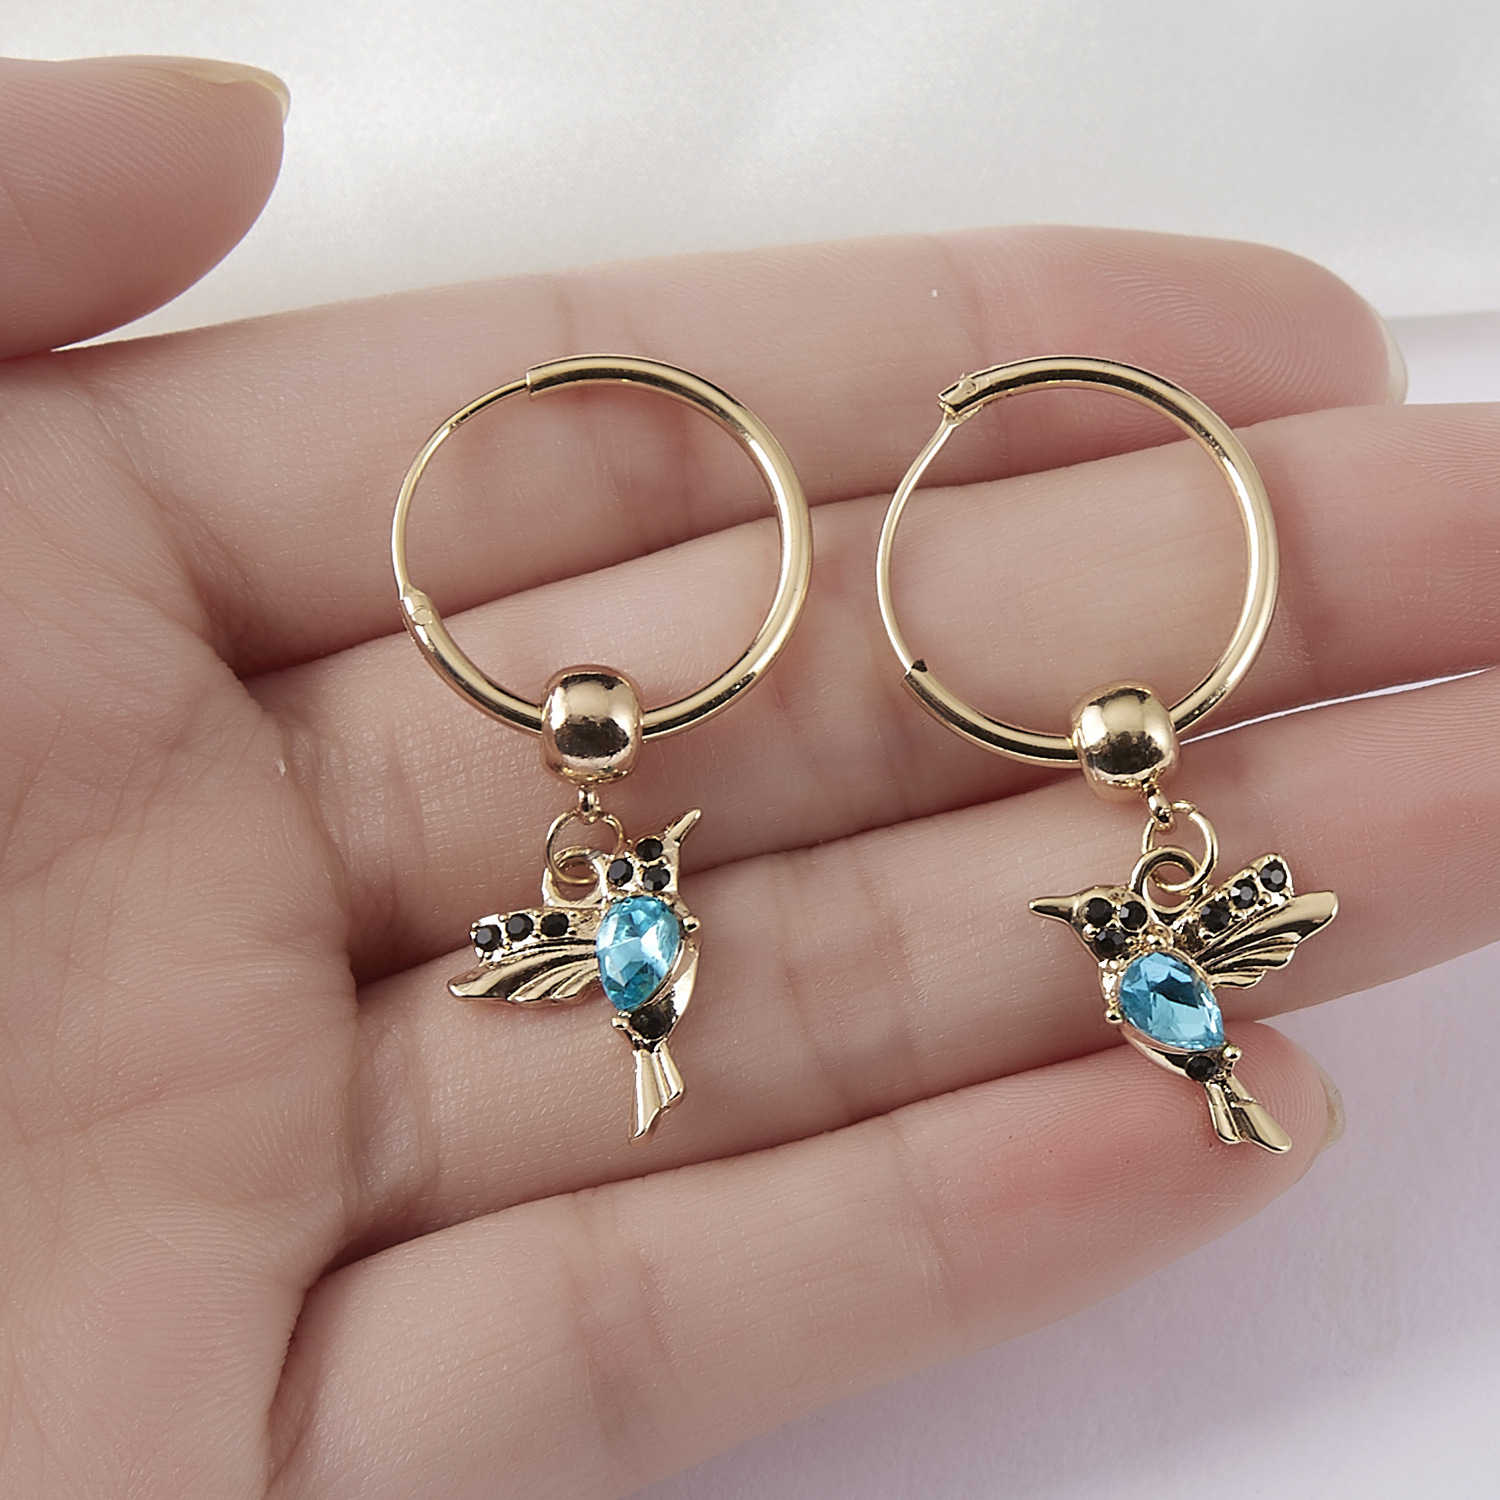 4:Blue hummingbird earrings